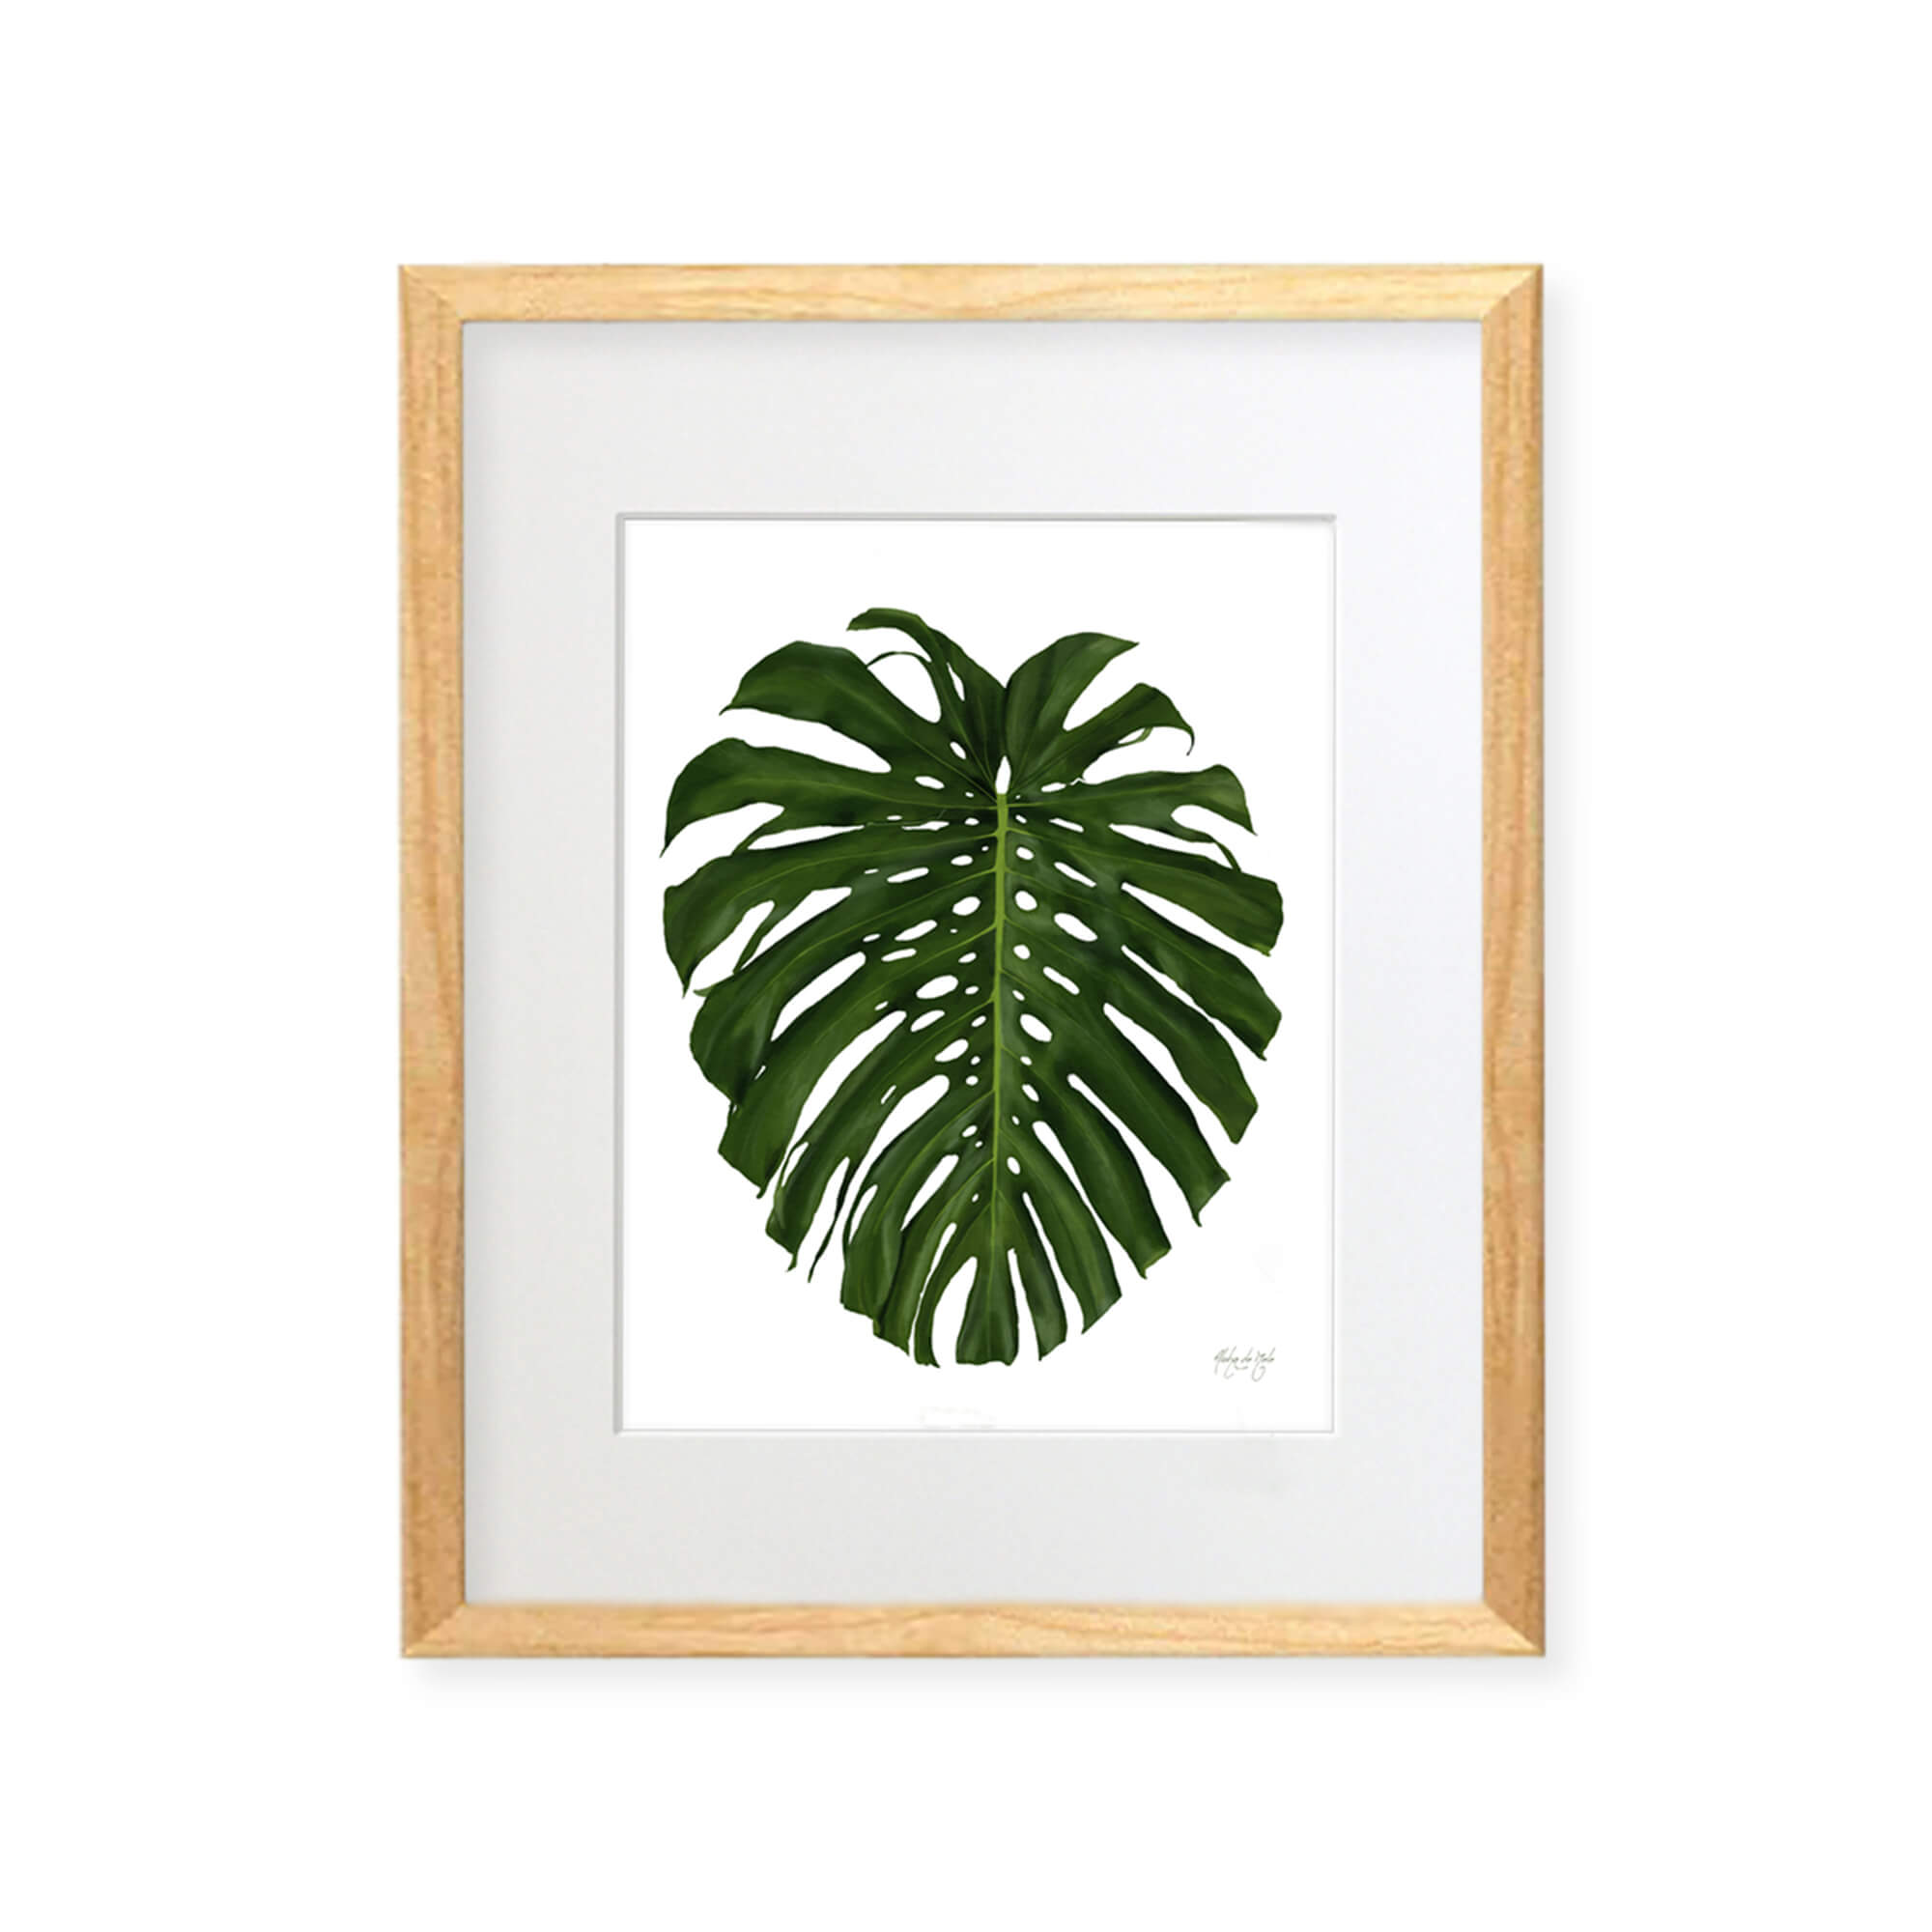 A framed matted art print of a beautifully painted monstera leaf by Hawaii artist Aloha De Mele